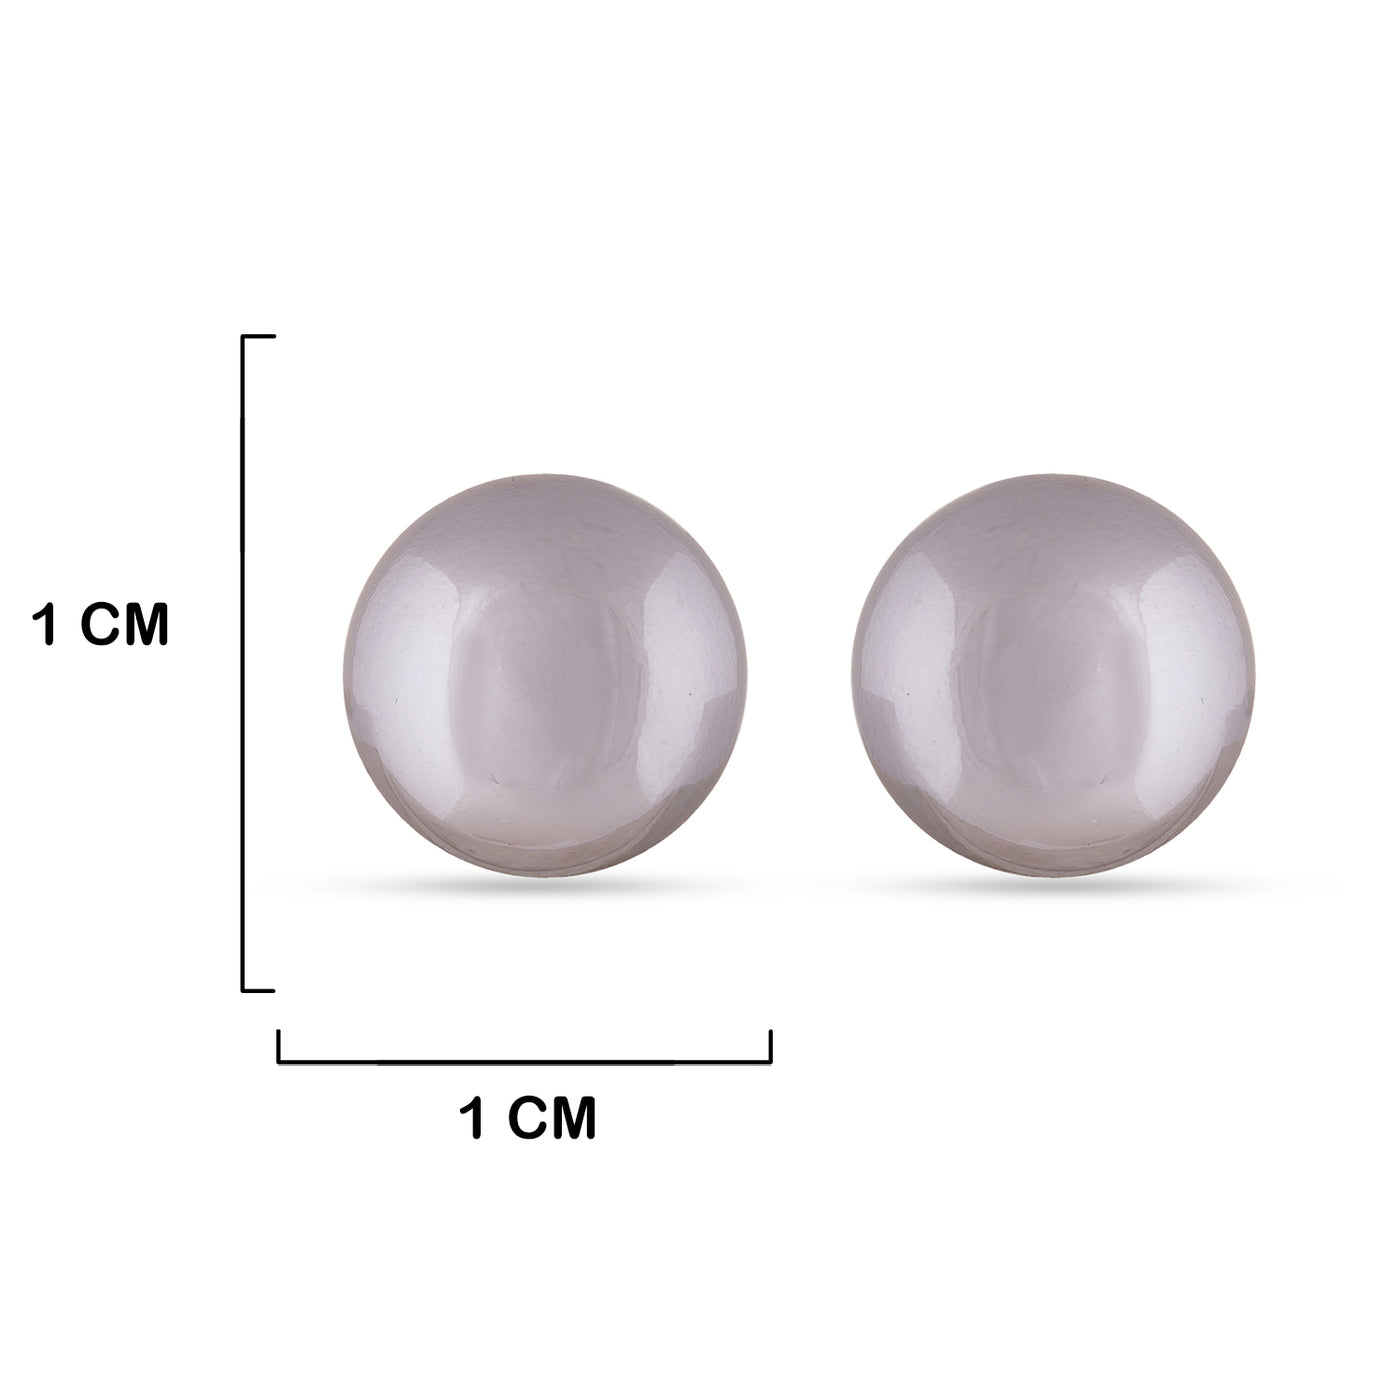 Pearl Stud Earrings with measurements in cm. 1cm by 1cm.